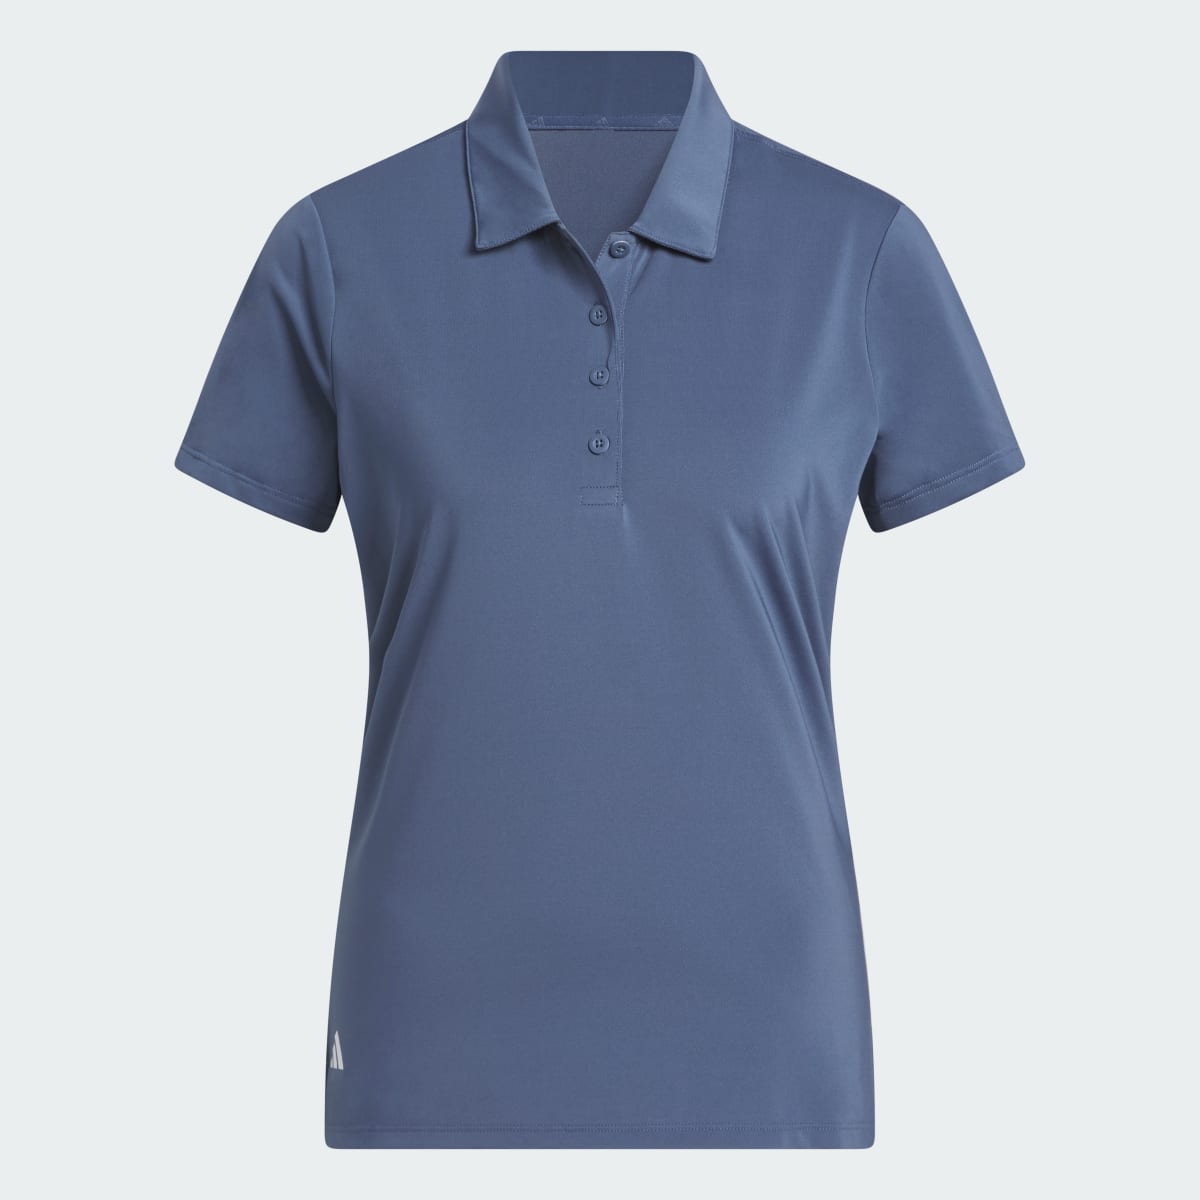 Adidas Ultimate365 Solid Short Sleeve Polo Shirt. 5